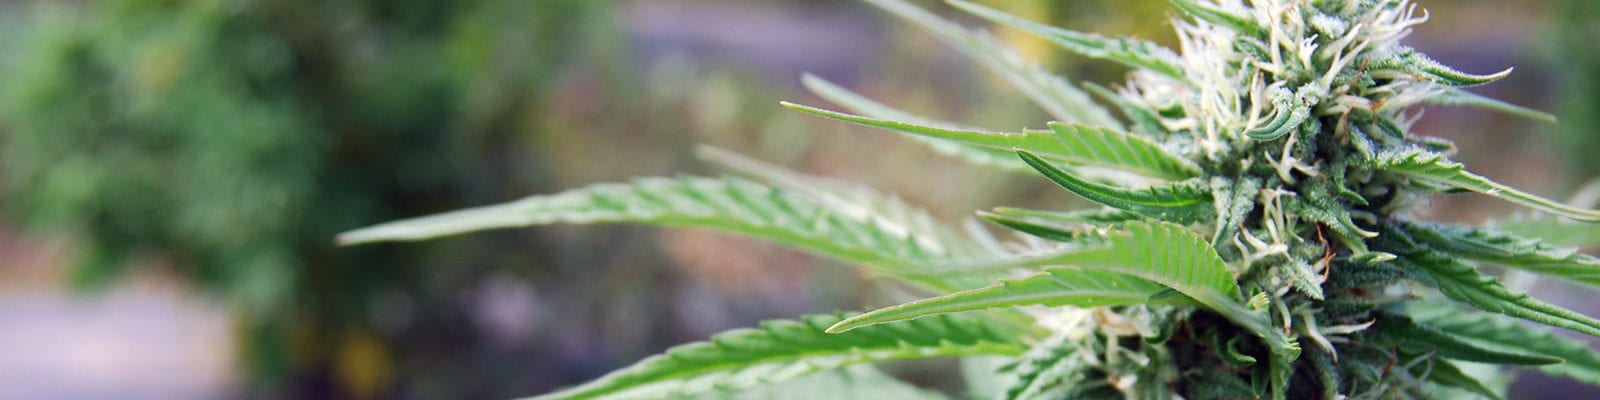 A large CBD-rich cannabis plant at an outdoor farm in Oregon.